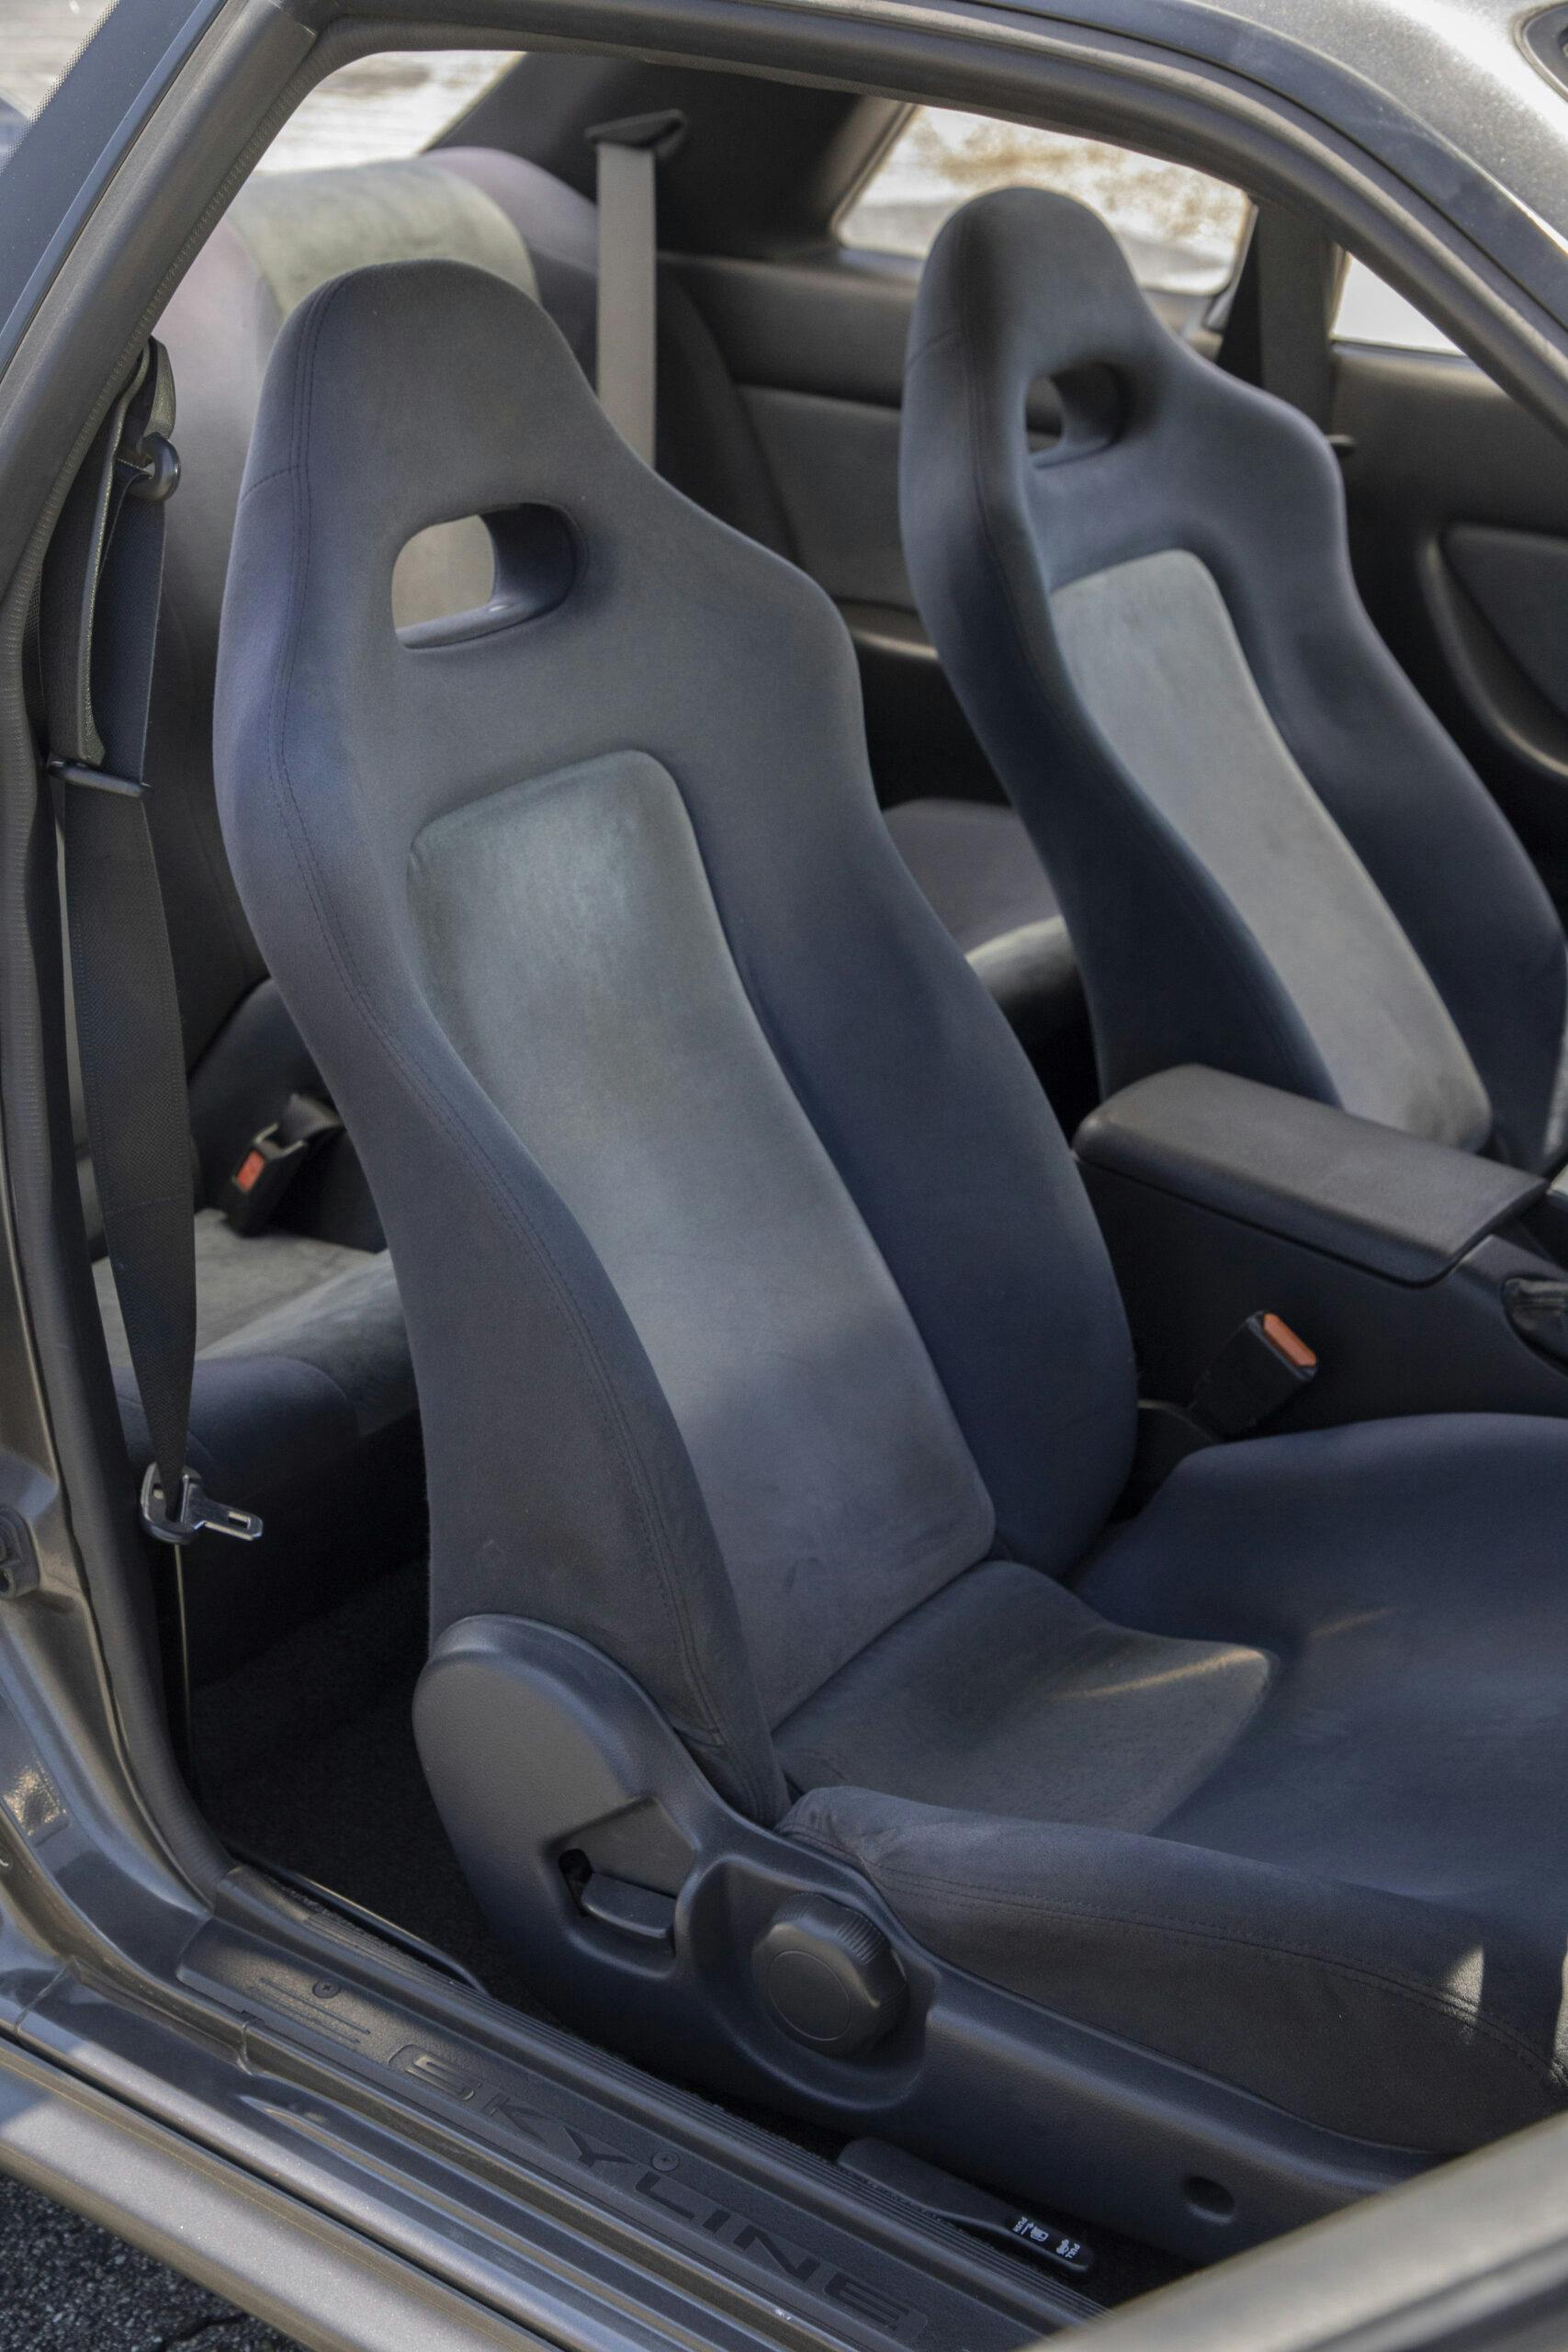 Nissan Skyline R32 GT-R interior front seats